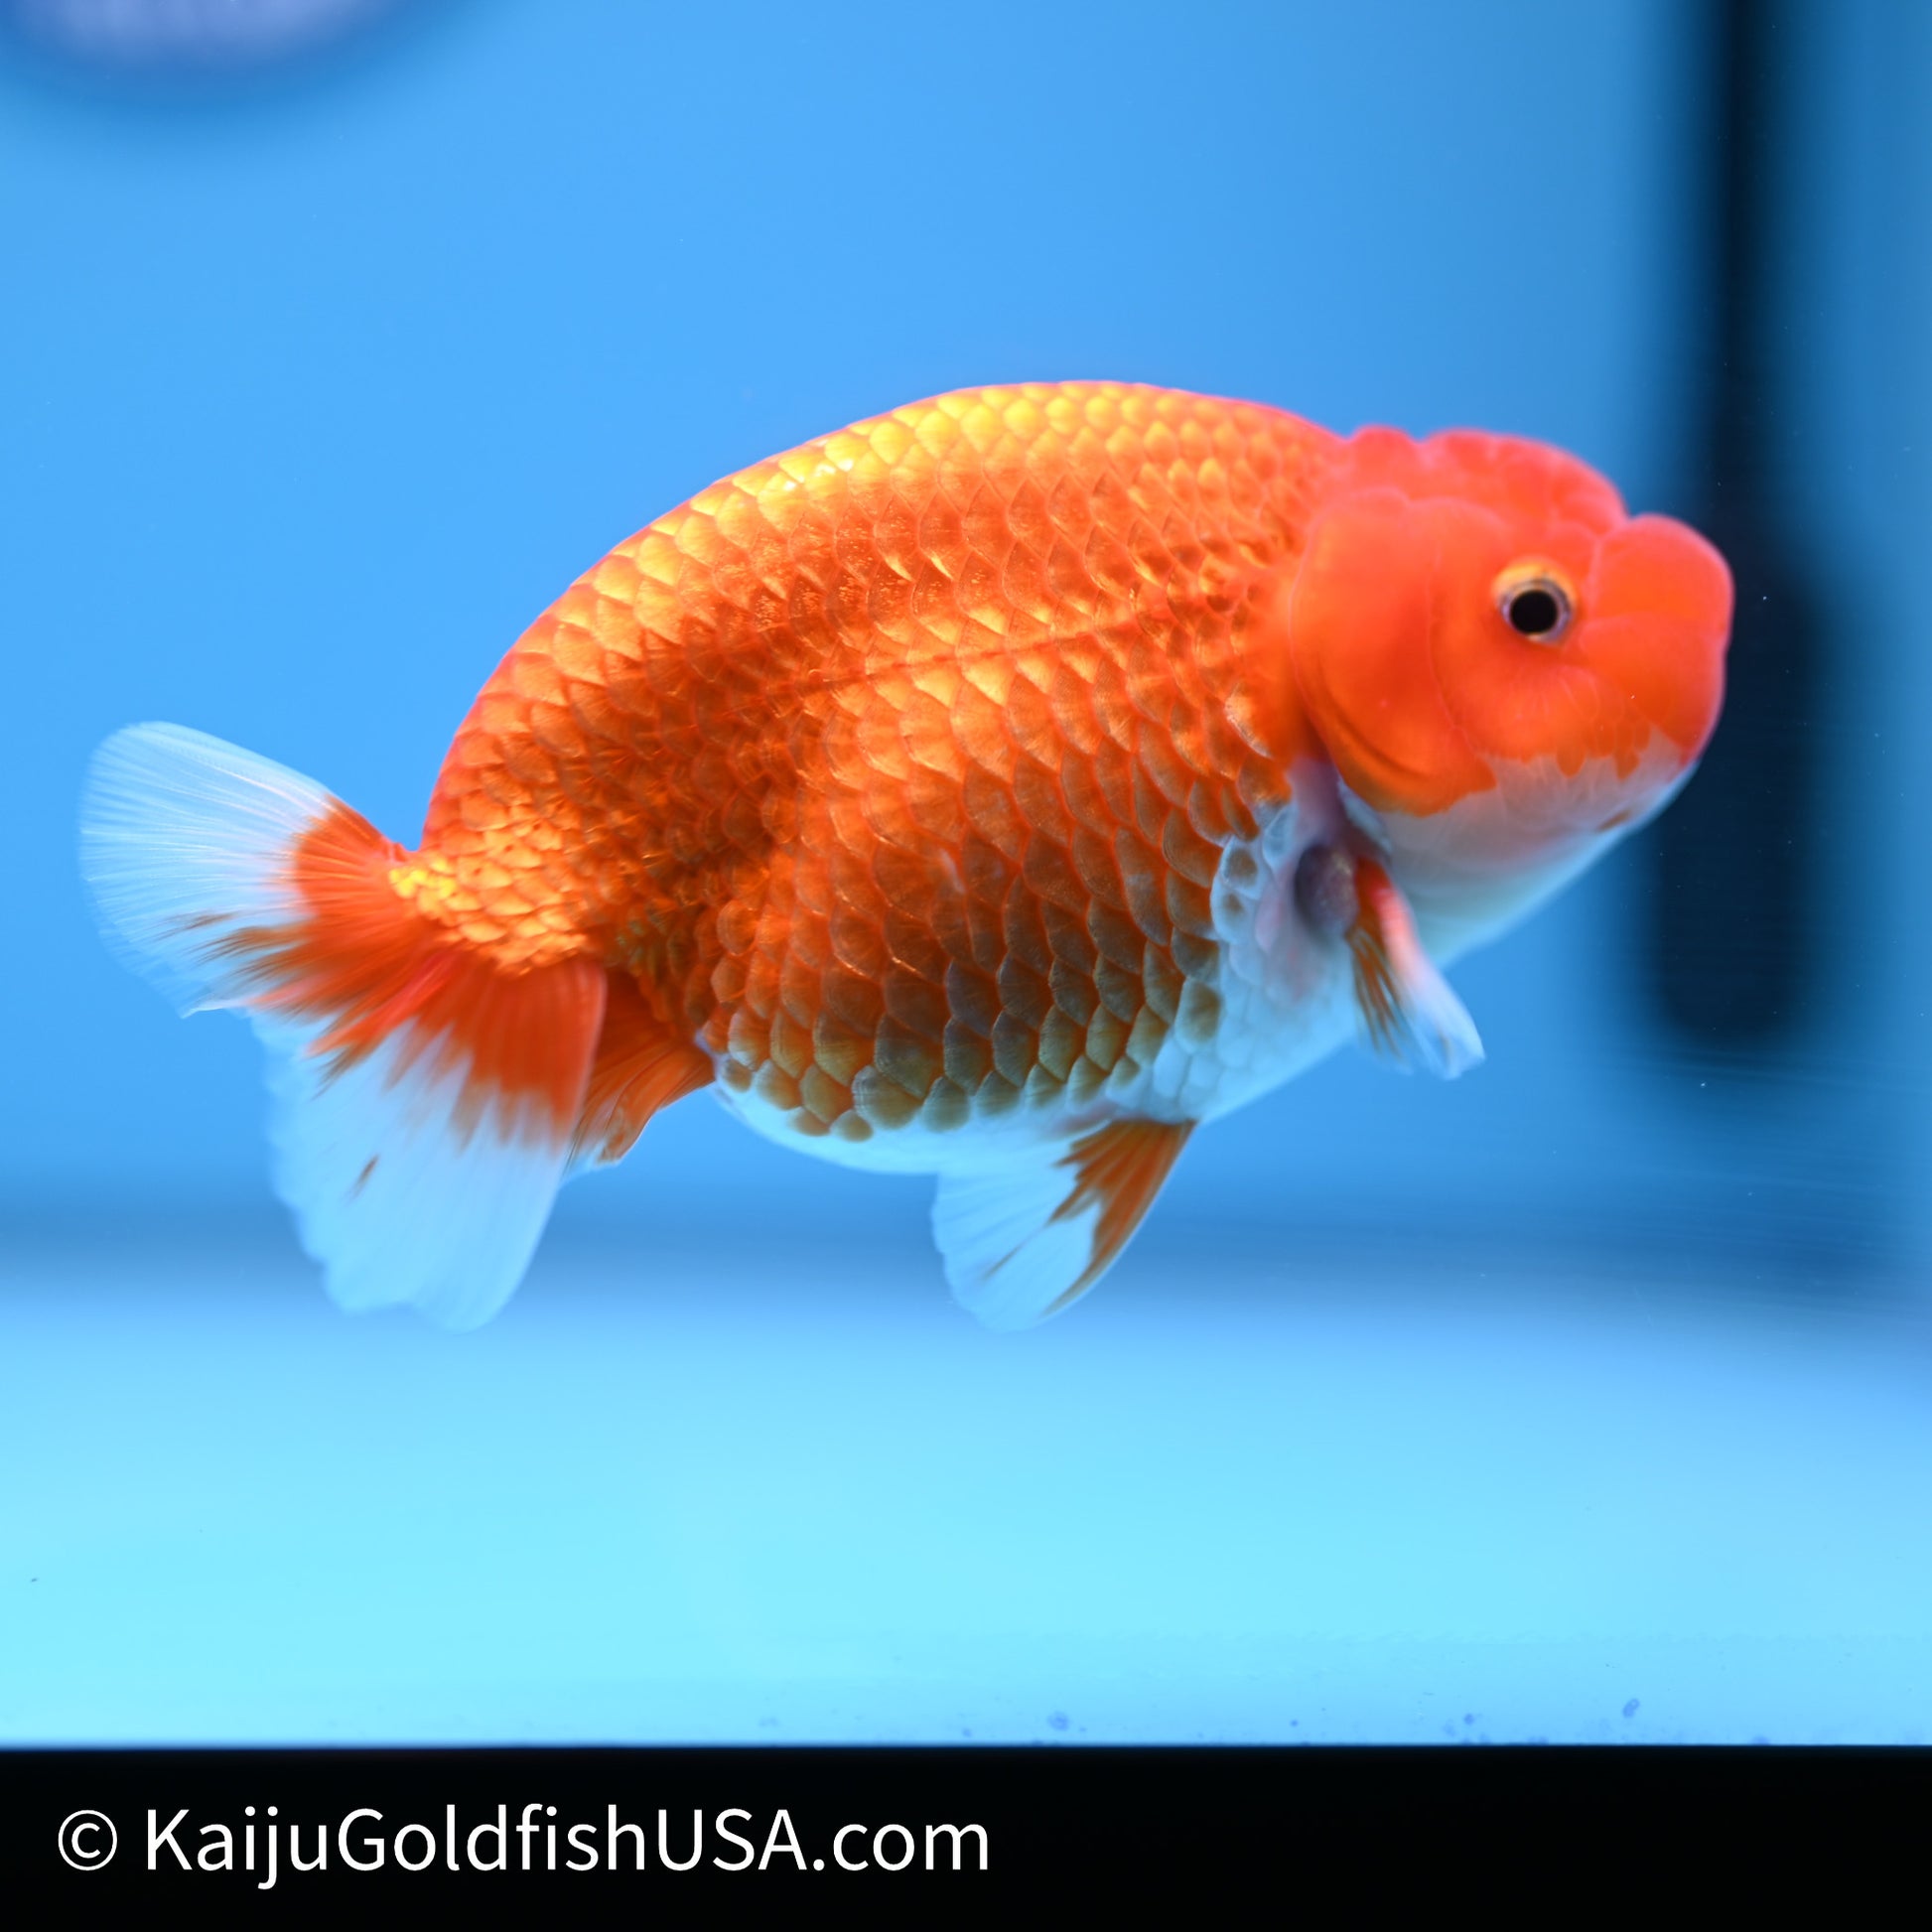 Red White Buffalo Ranchu 4in Body (240621_RC06) - Please Read Description - Kaiju Goldfish USA